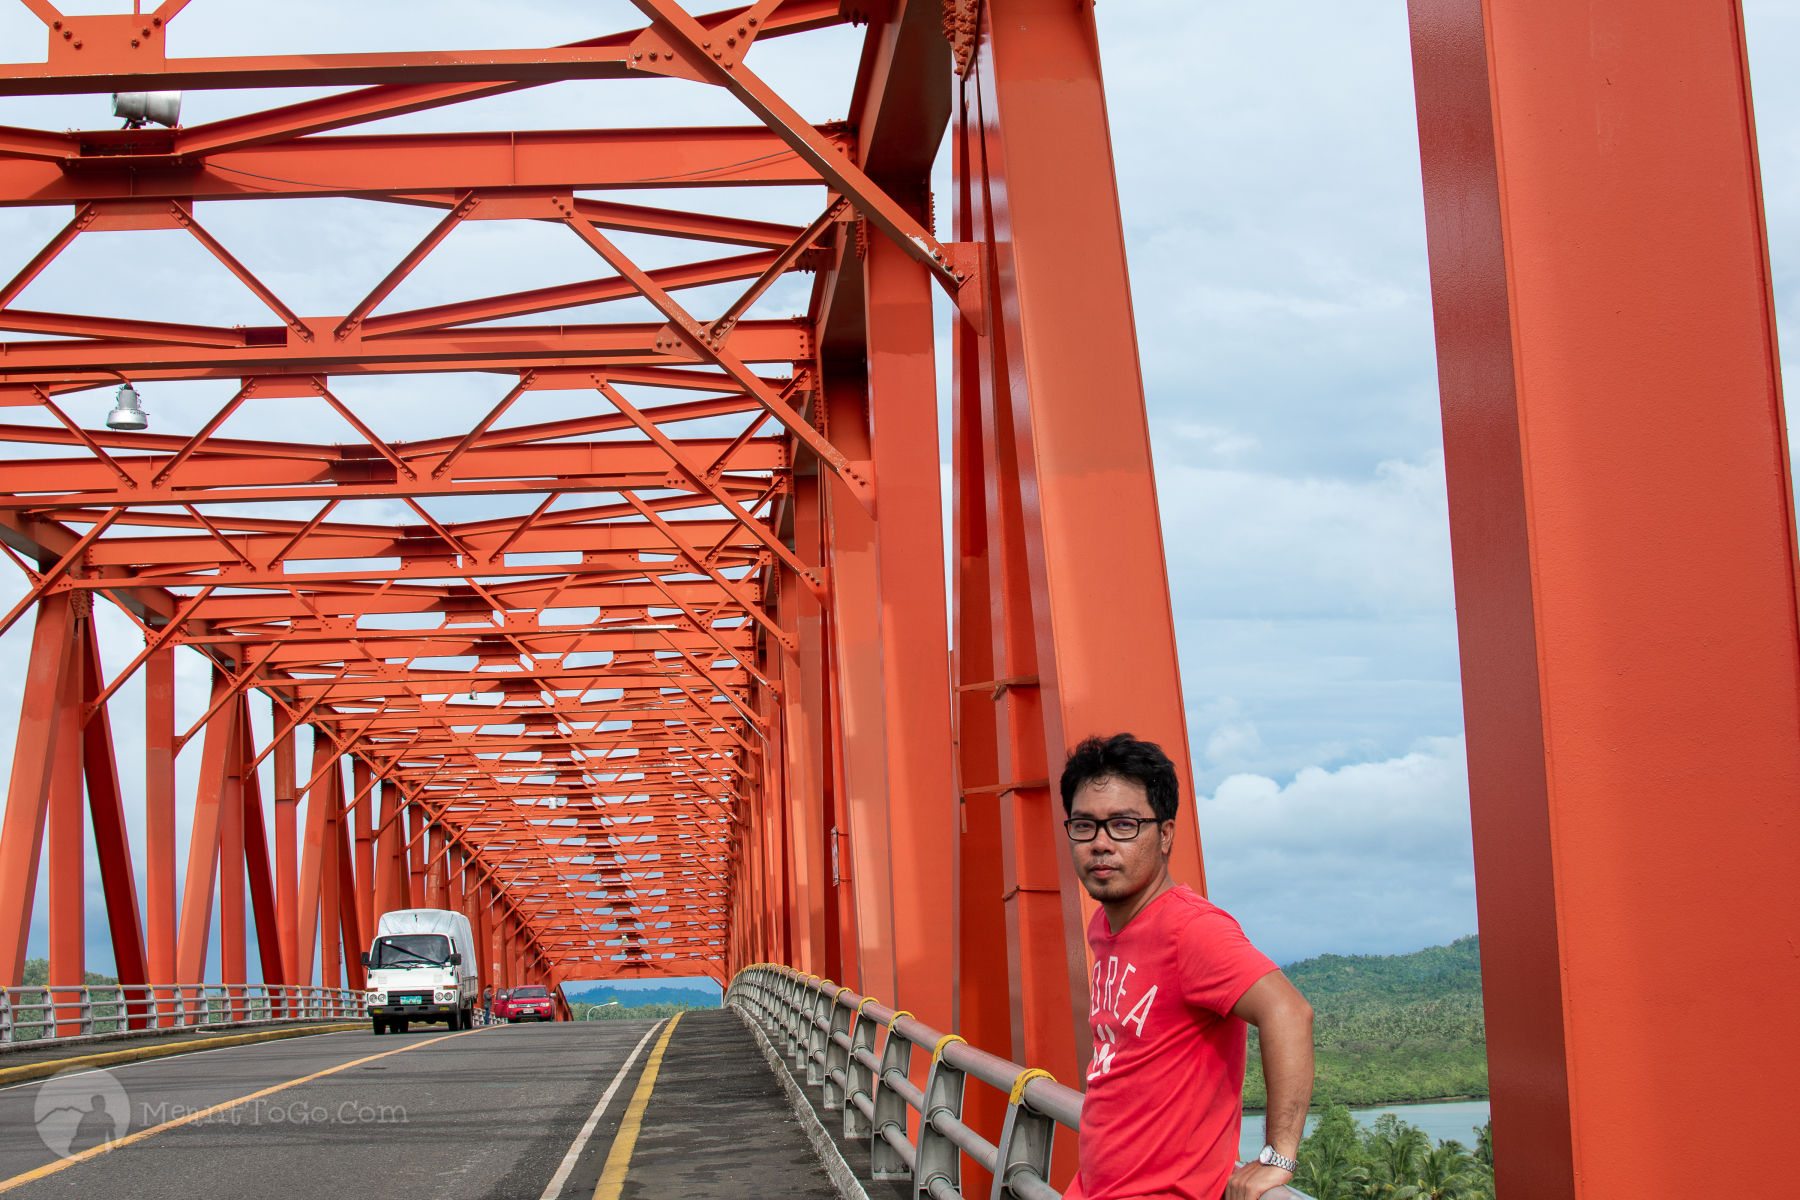 San Juanico Bridge in Leyte